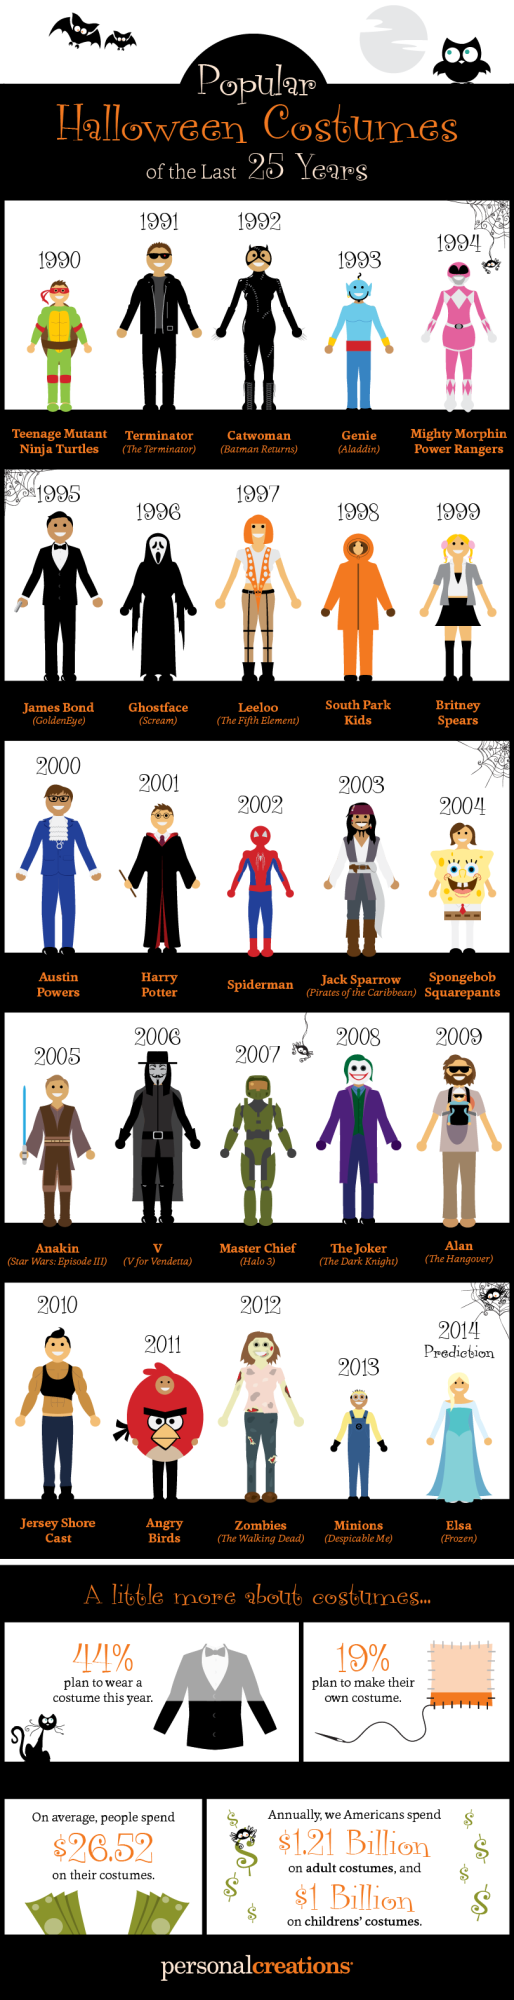 popular_halloween_costumes_25_years